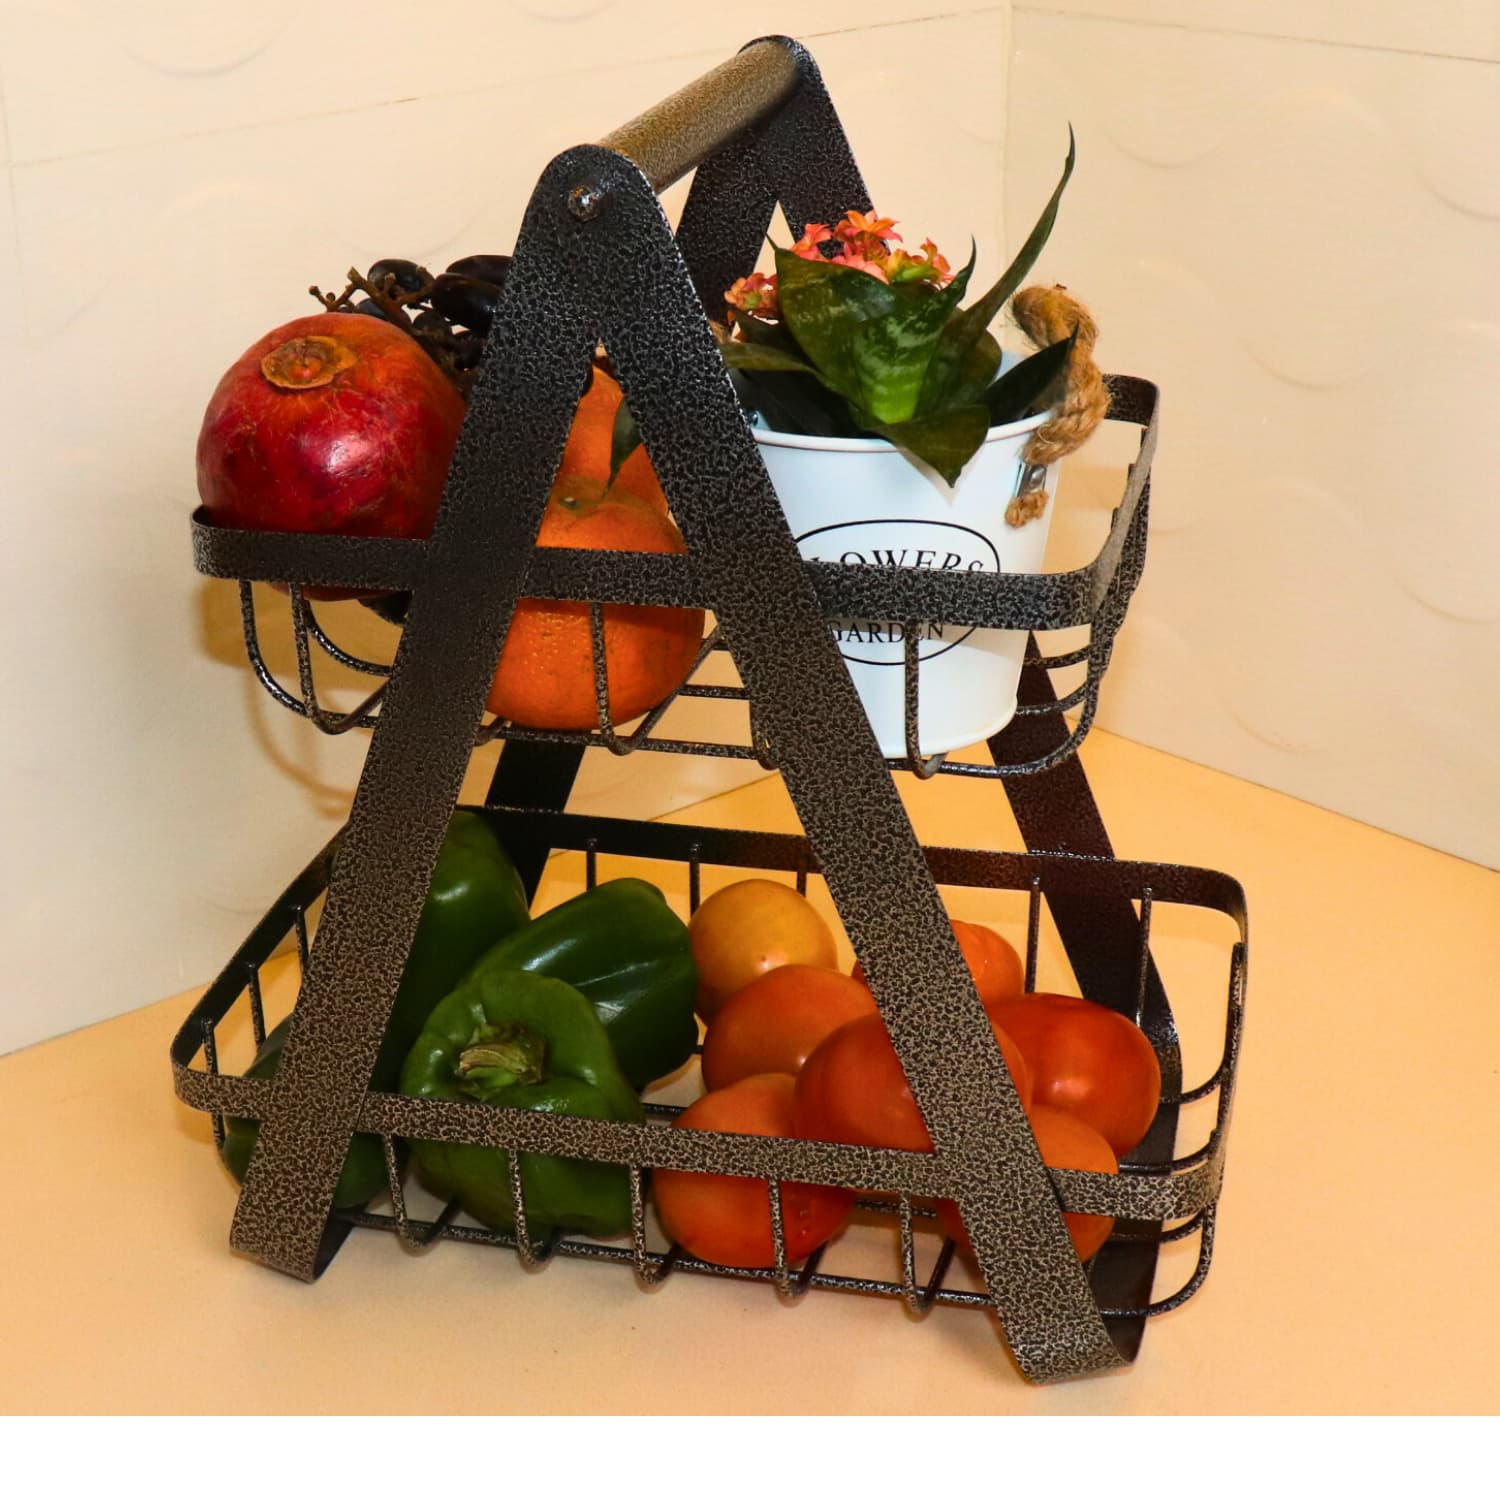 The Metal Fruit & Vegetable Basket